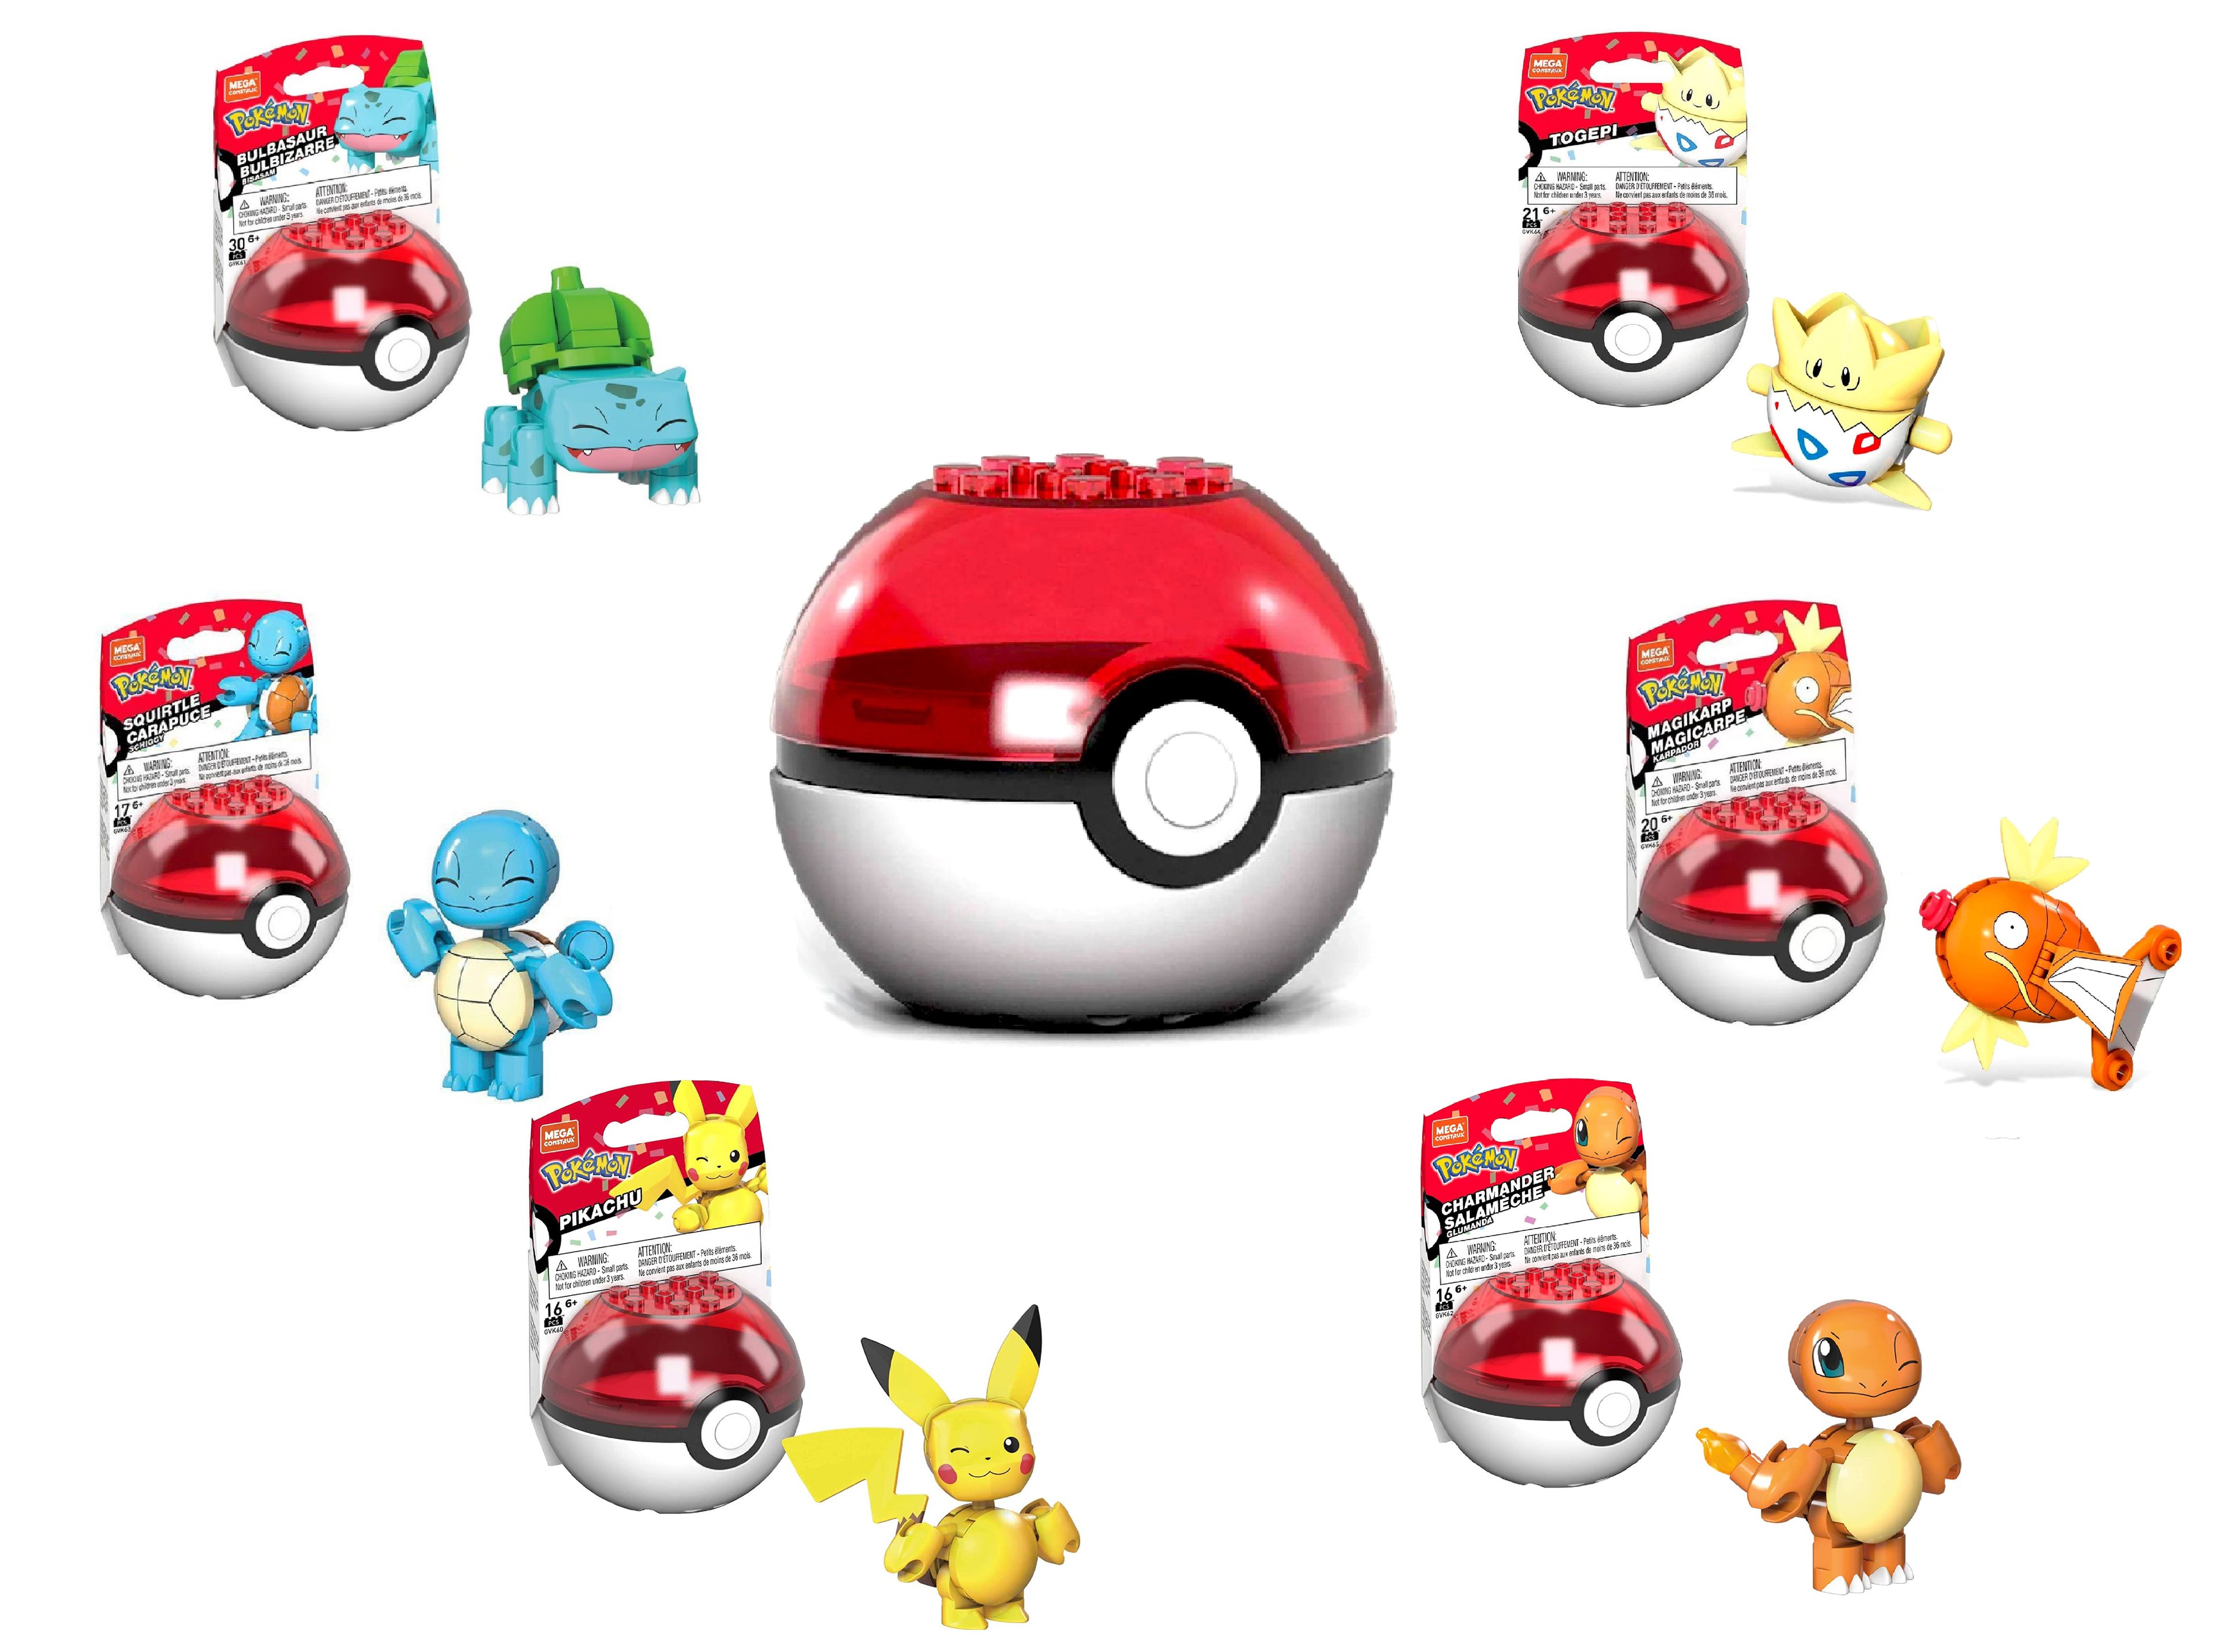 Kit Pokémon Pokebola com Personagens 4 Faces